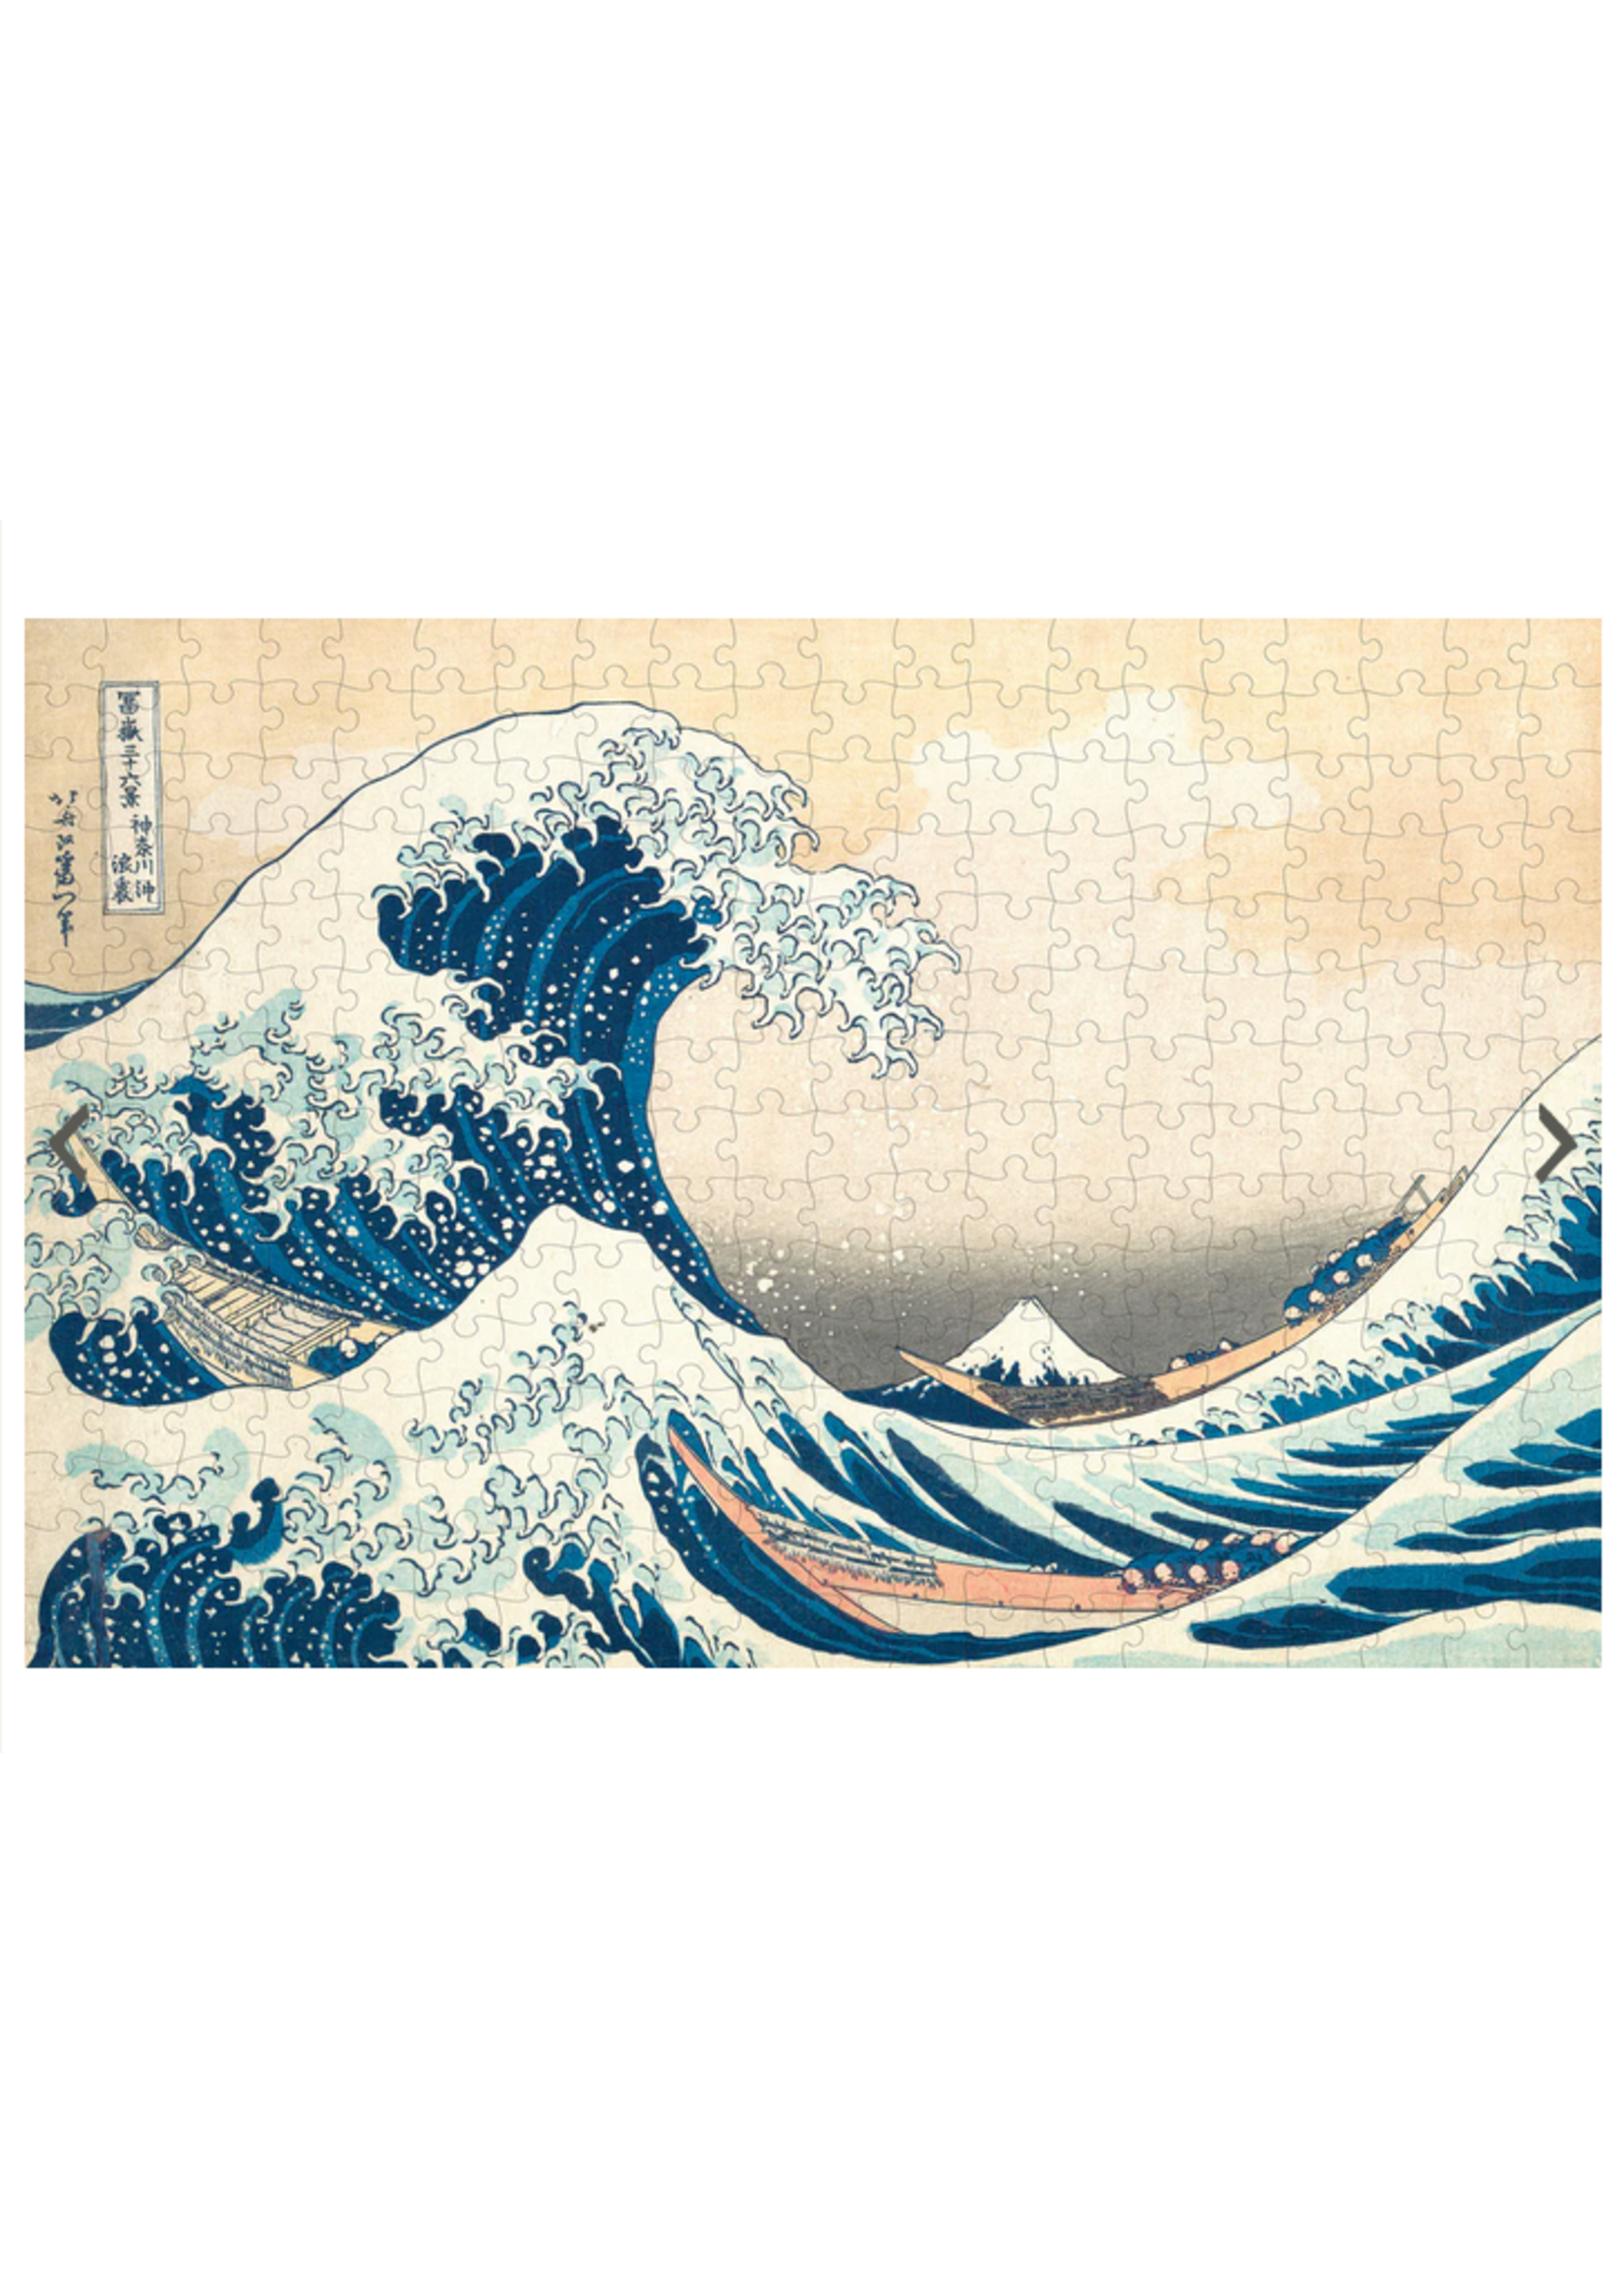 Pomegranate Hokusai The Great Wave Puzzle